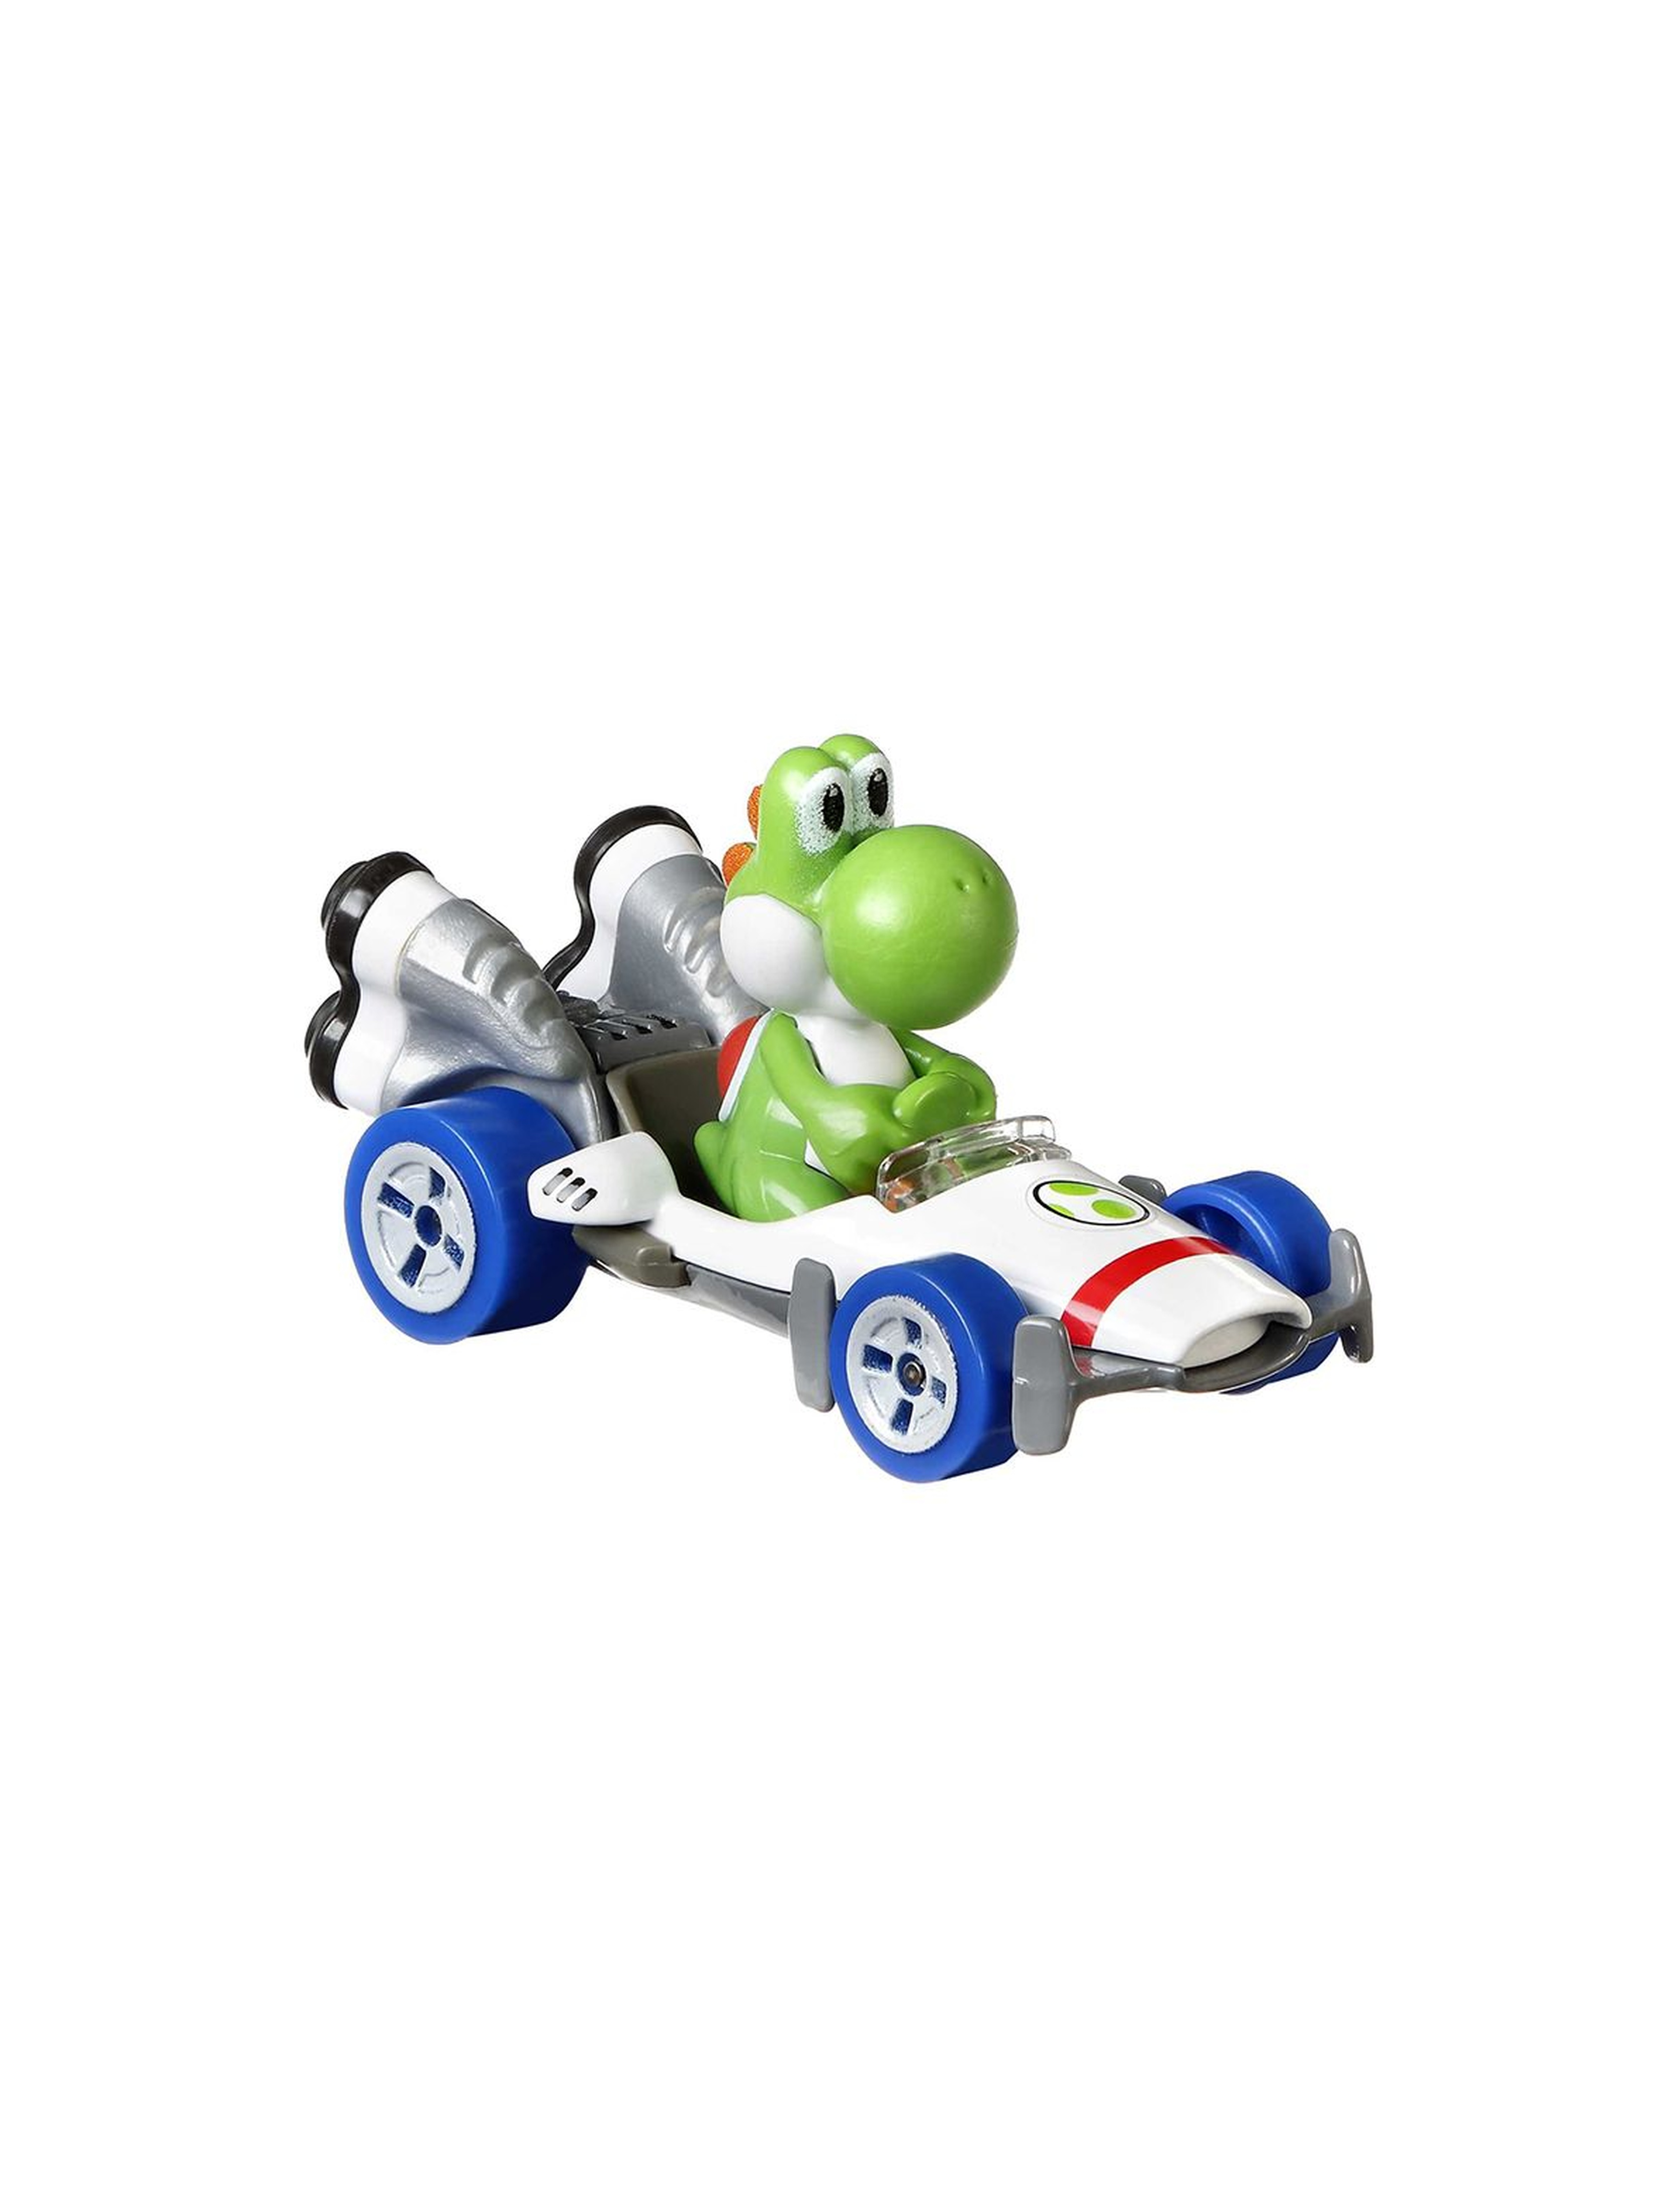 Hot Wheels Mario Kart Pojazd Yoshi - B Dasher 3+